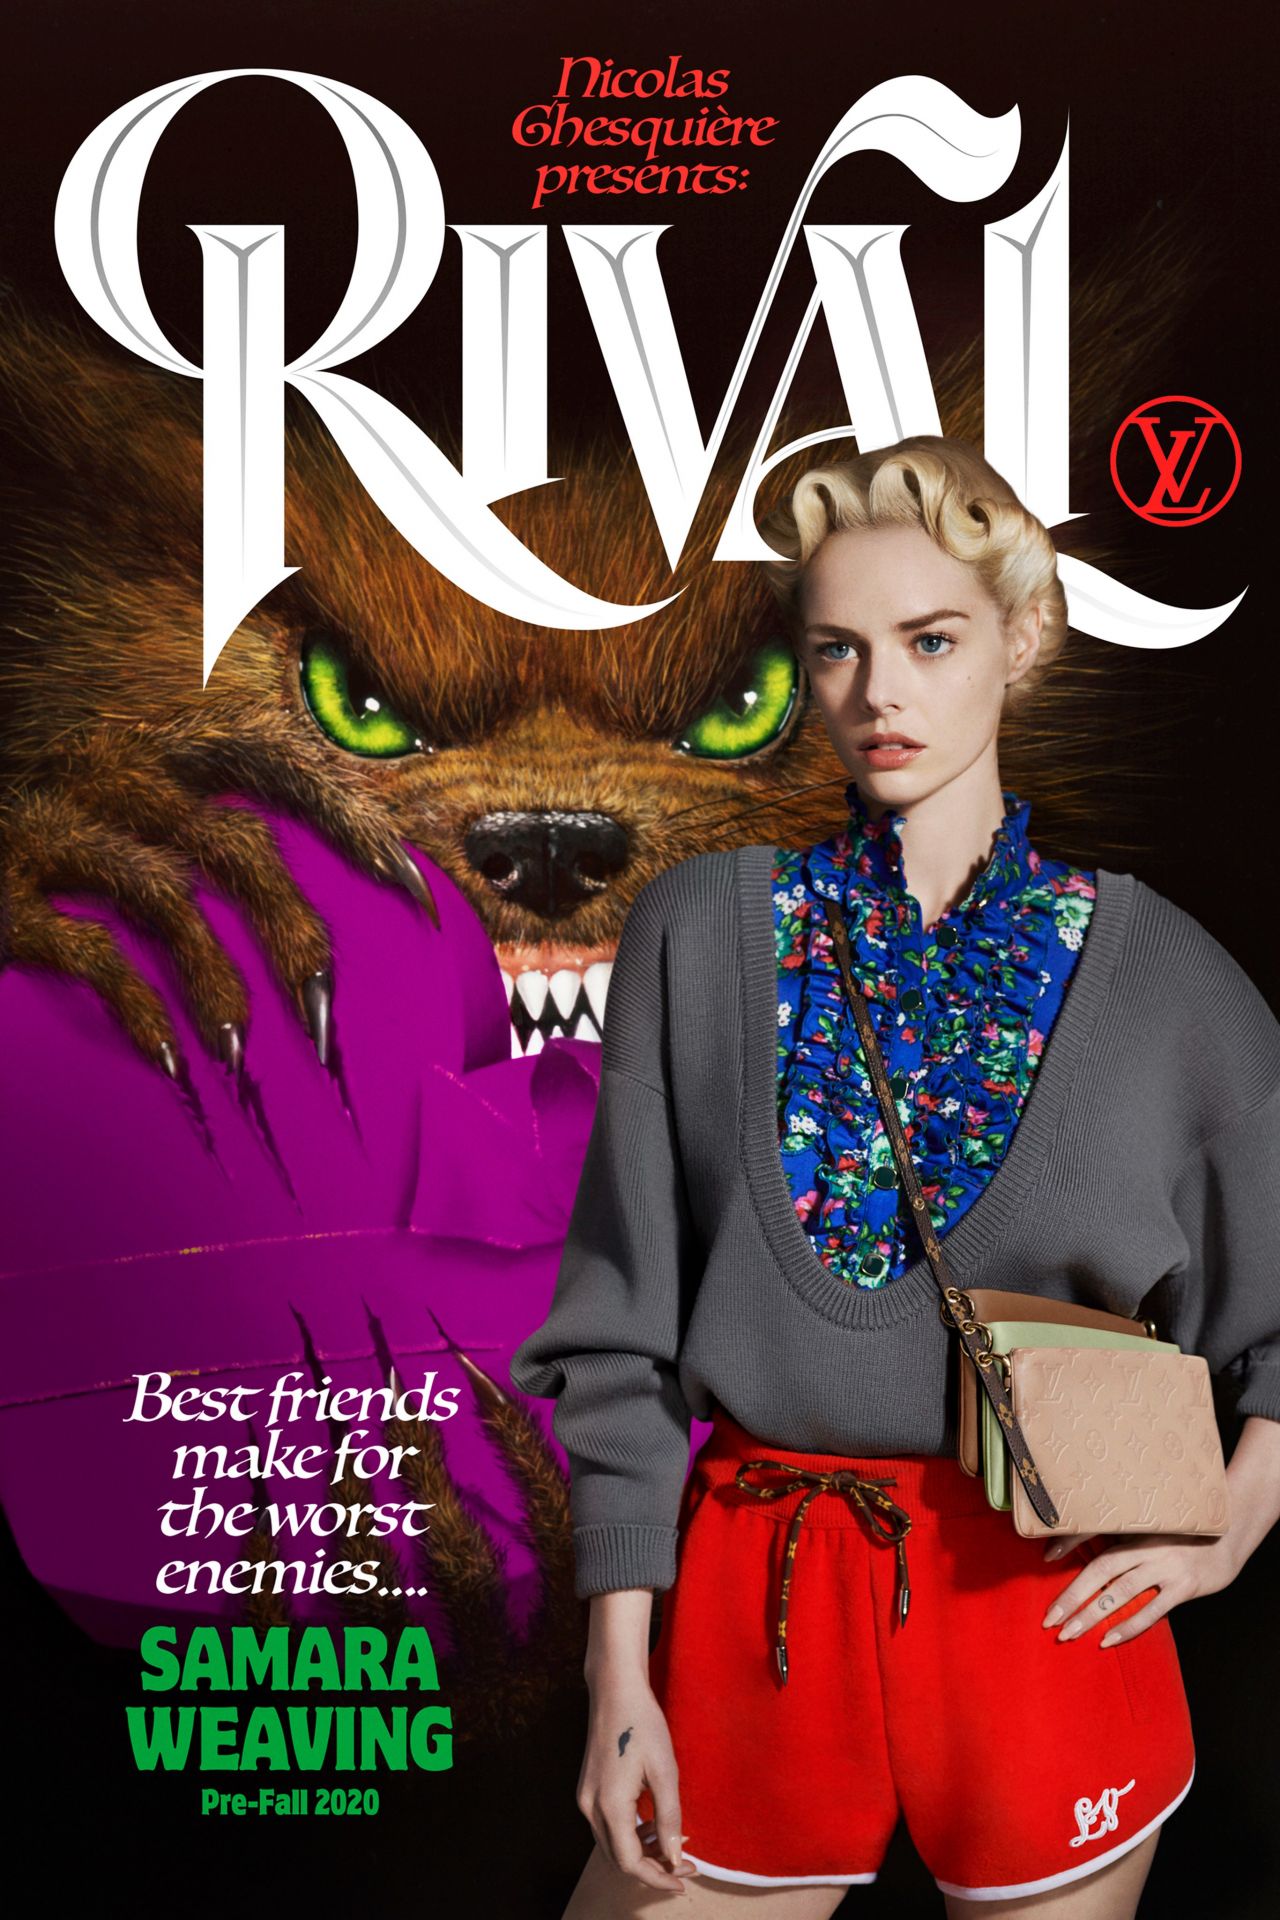 Louis Vuitton's pre-fall campaign taps Samara Weaving, Sophie